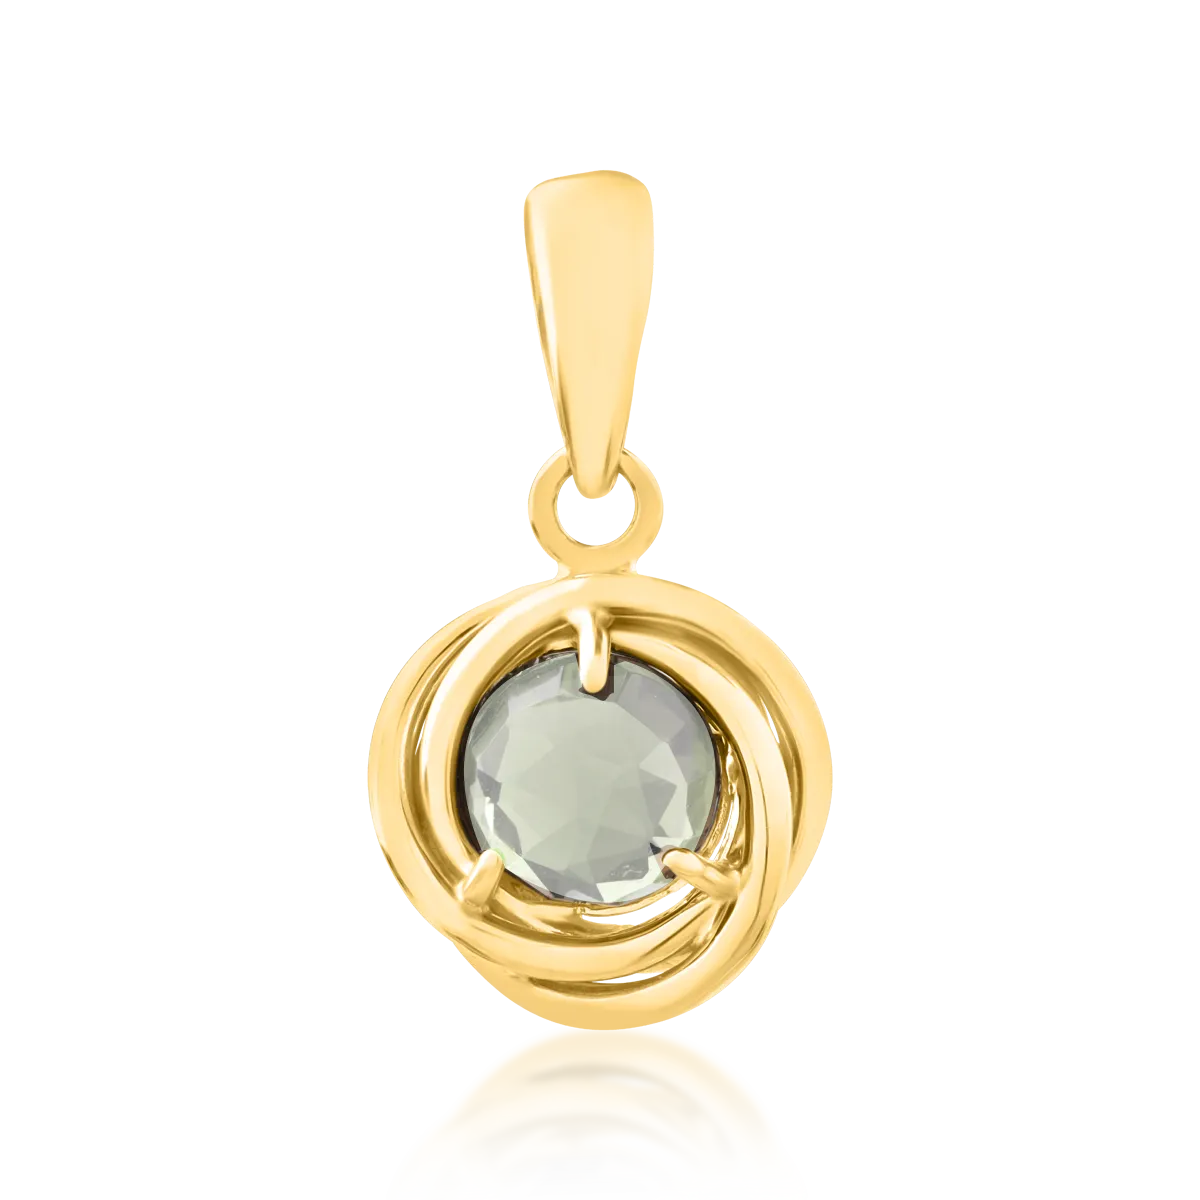 Yellow gold pendant